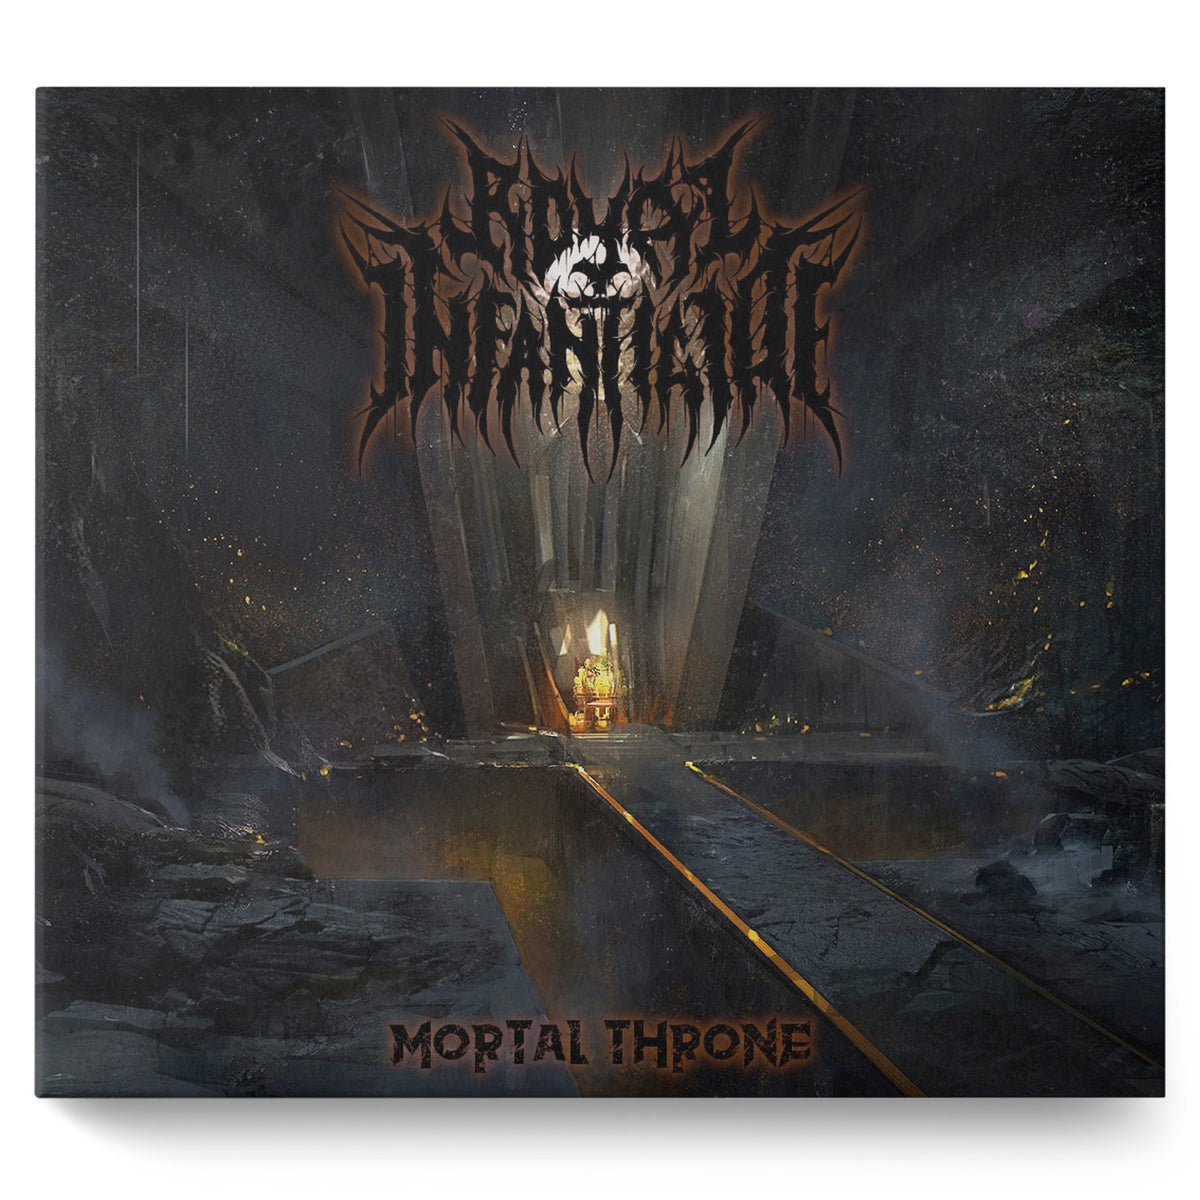 Royal Infanticide "Mortal Throne" Digipak CD - Miasma Records